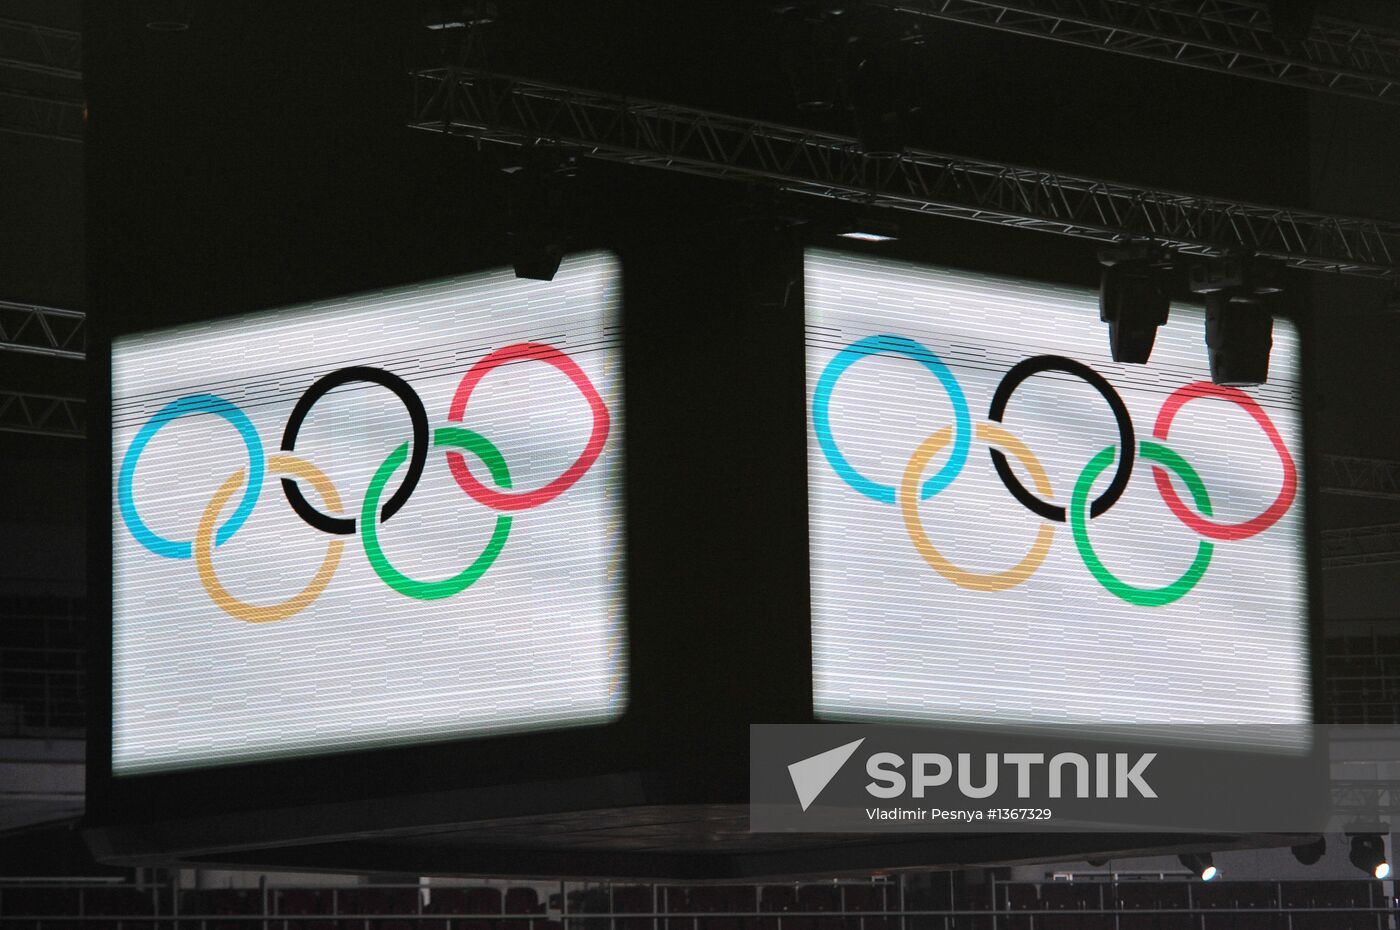 Symbols of the 2014 Olympics